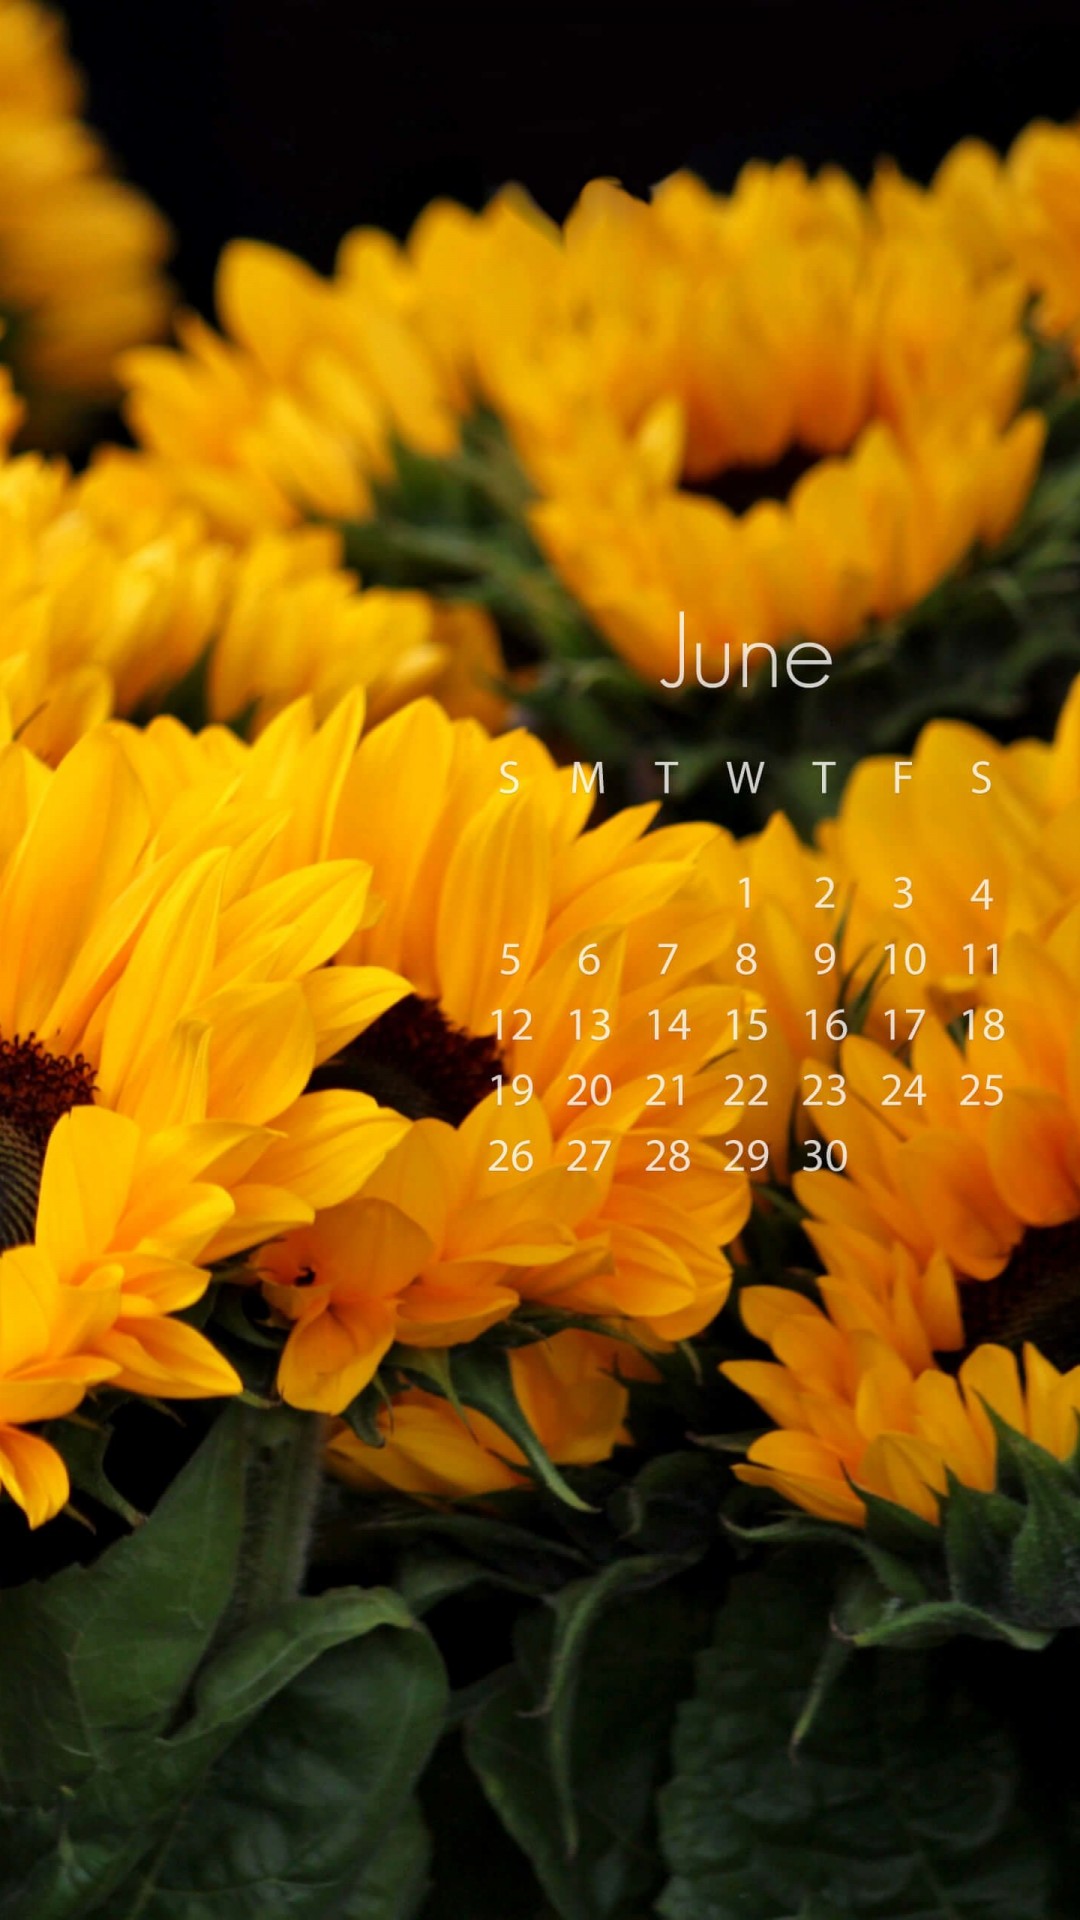 June 2016 Calendar Wallpaper for Google Nexus 5